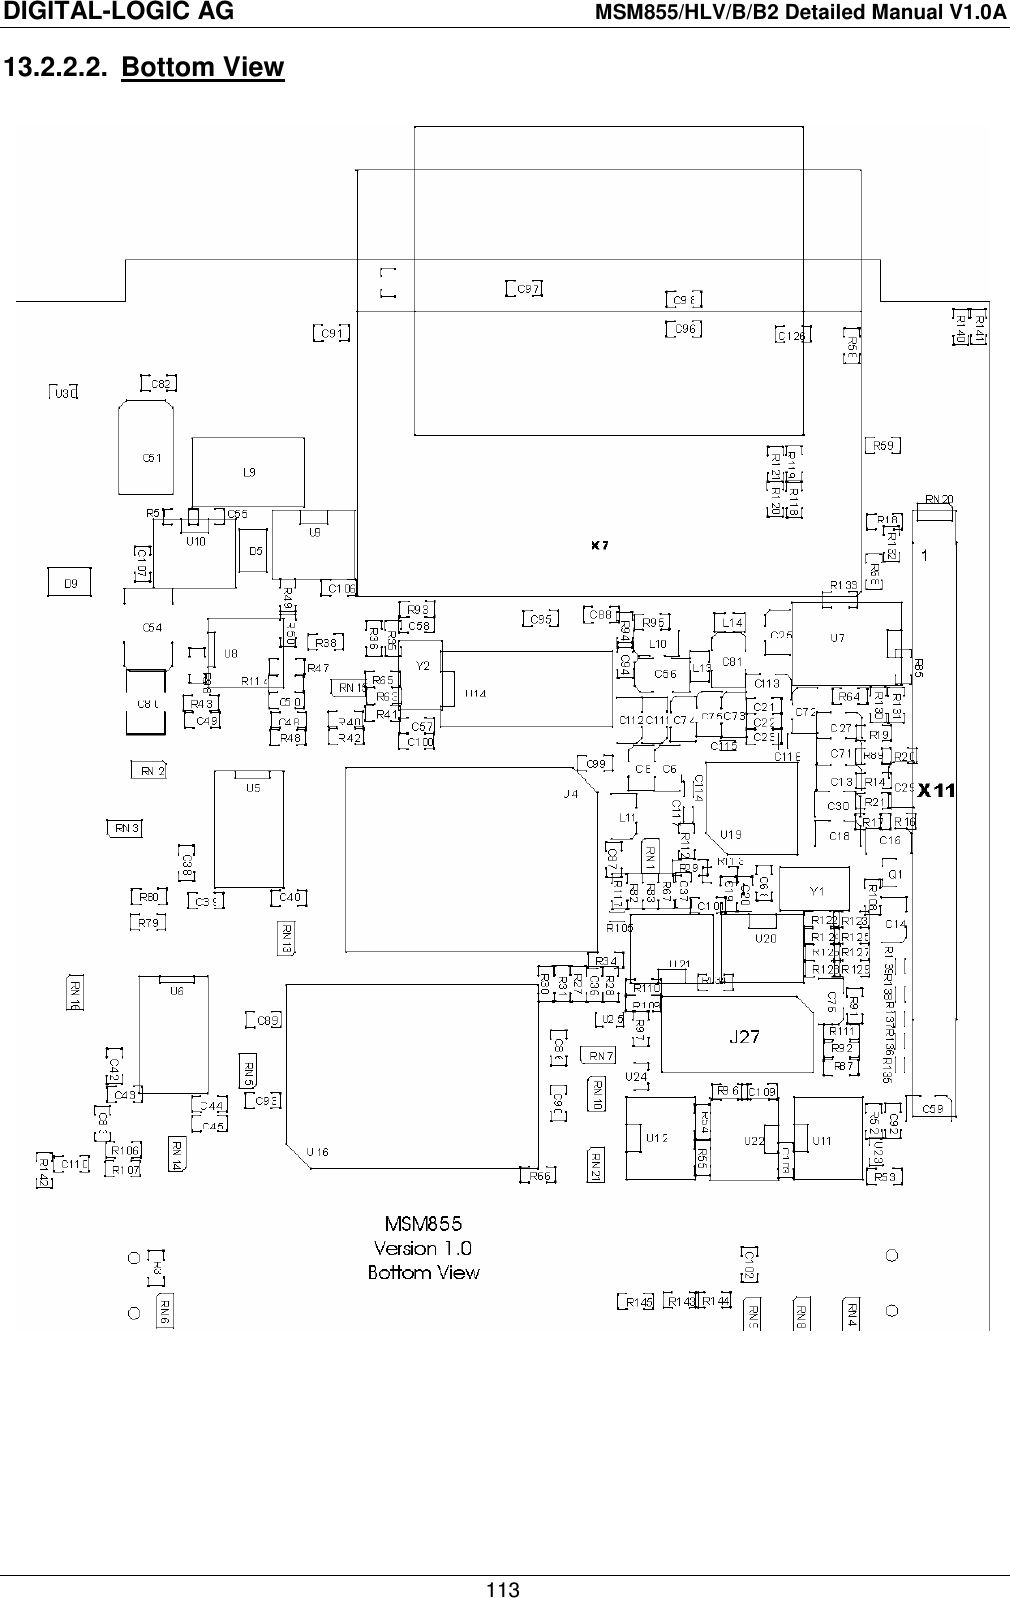 DIGITAL-LOGIC AG    MSM855/HLV/B/B2 Detailed Manual V1.0A    113 13.2.2.2.  Bottom View   